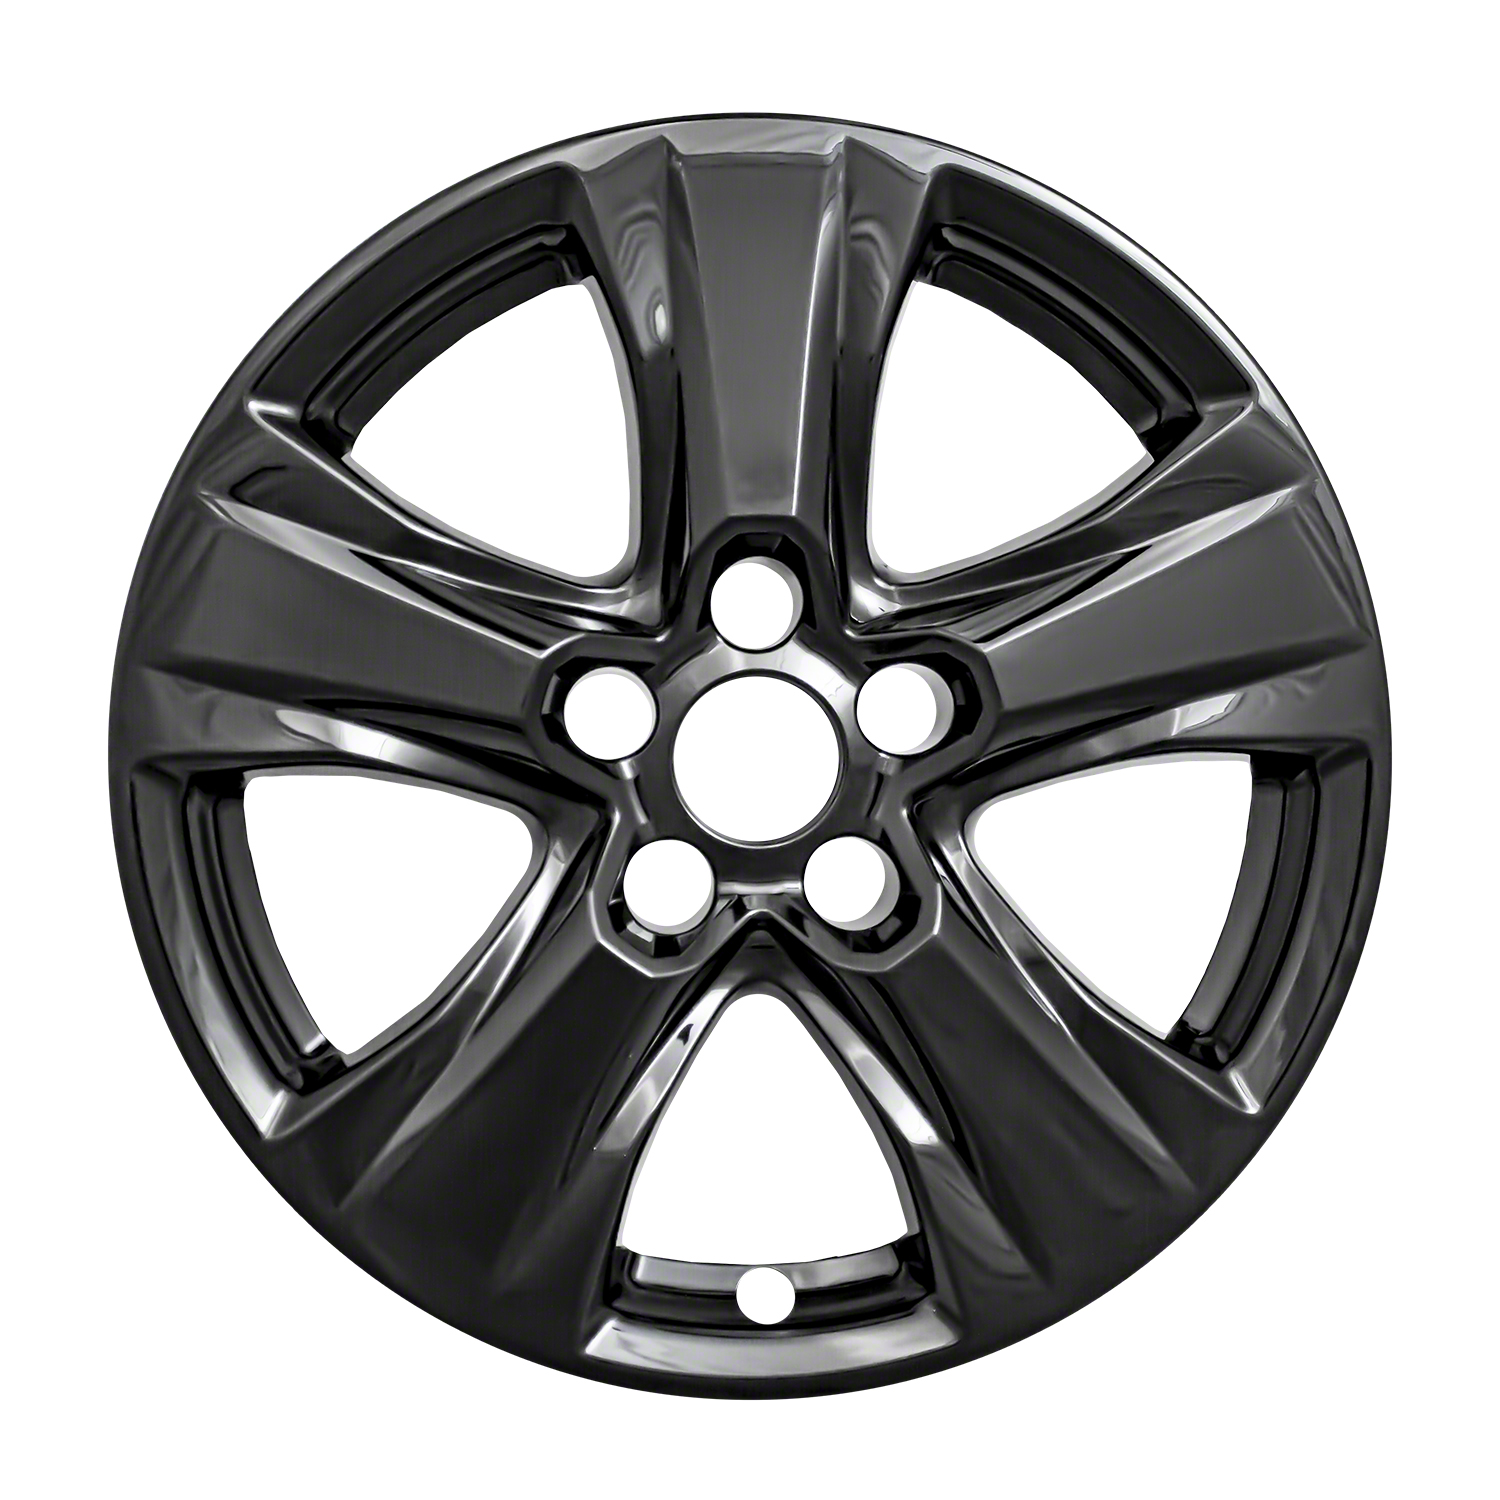 Auto Reflections Black 5 V Spoke 17" Wheel Skins for 2019